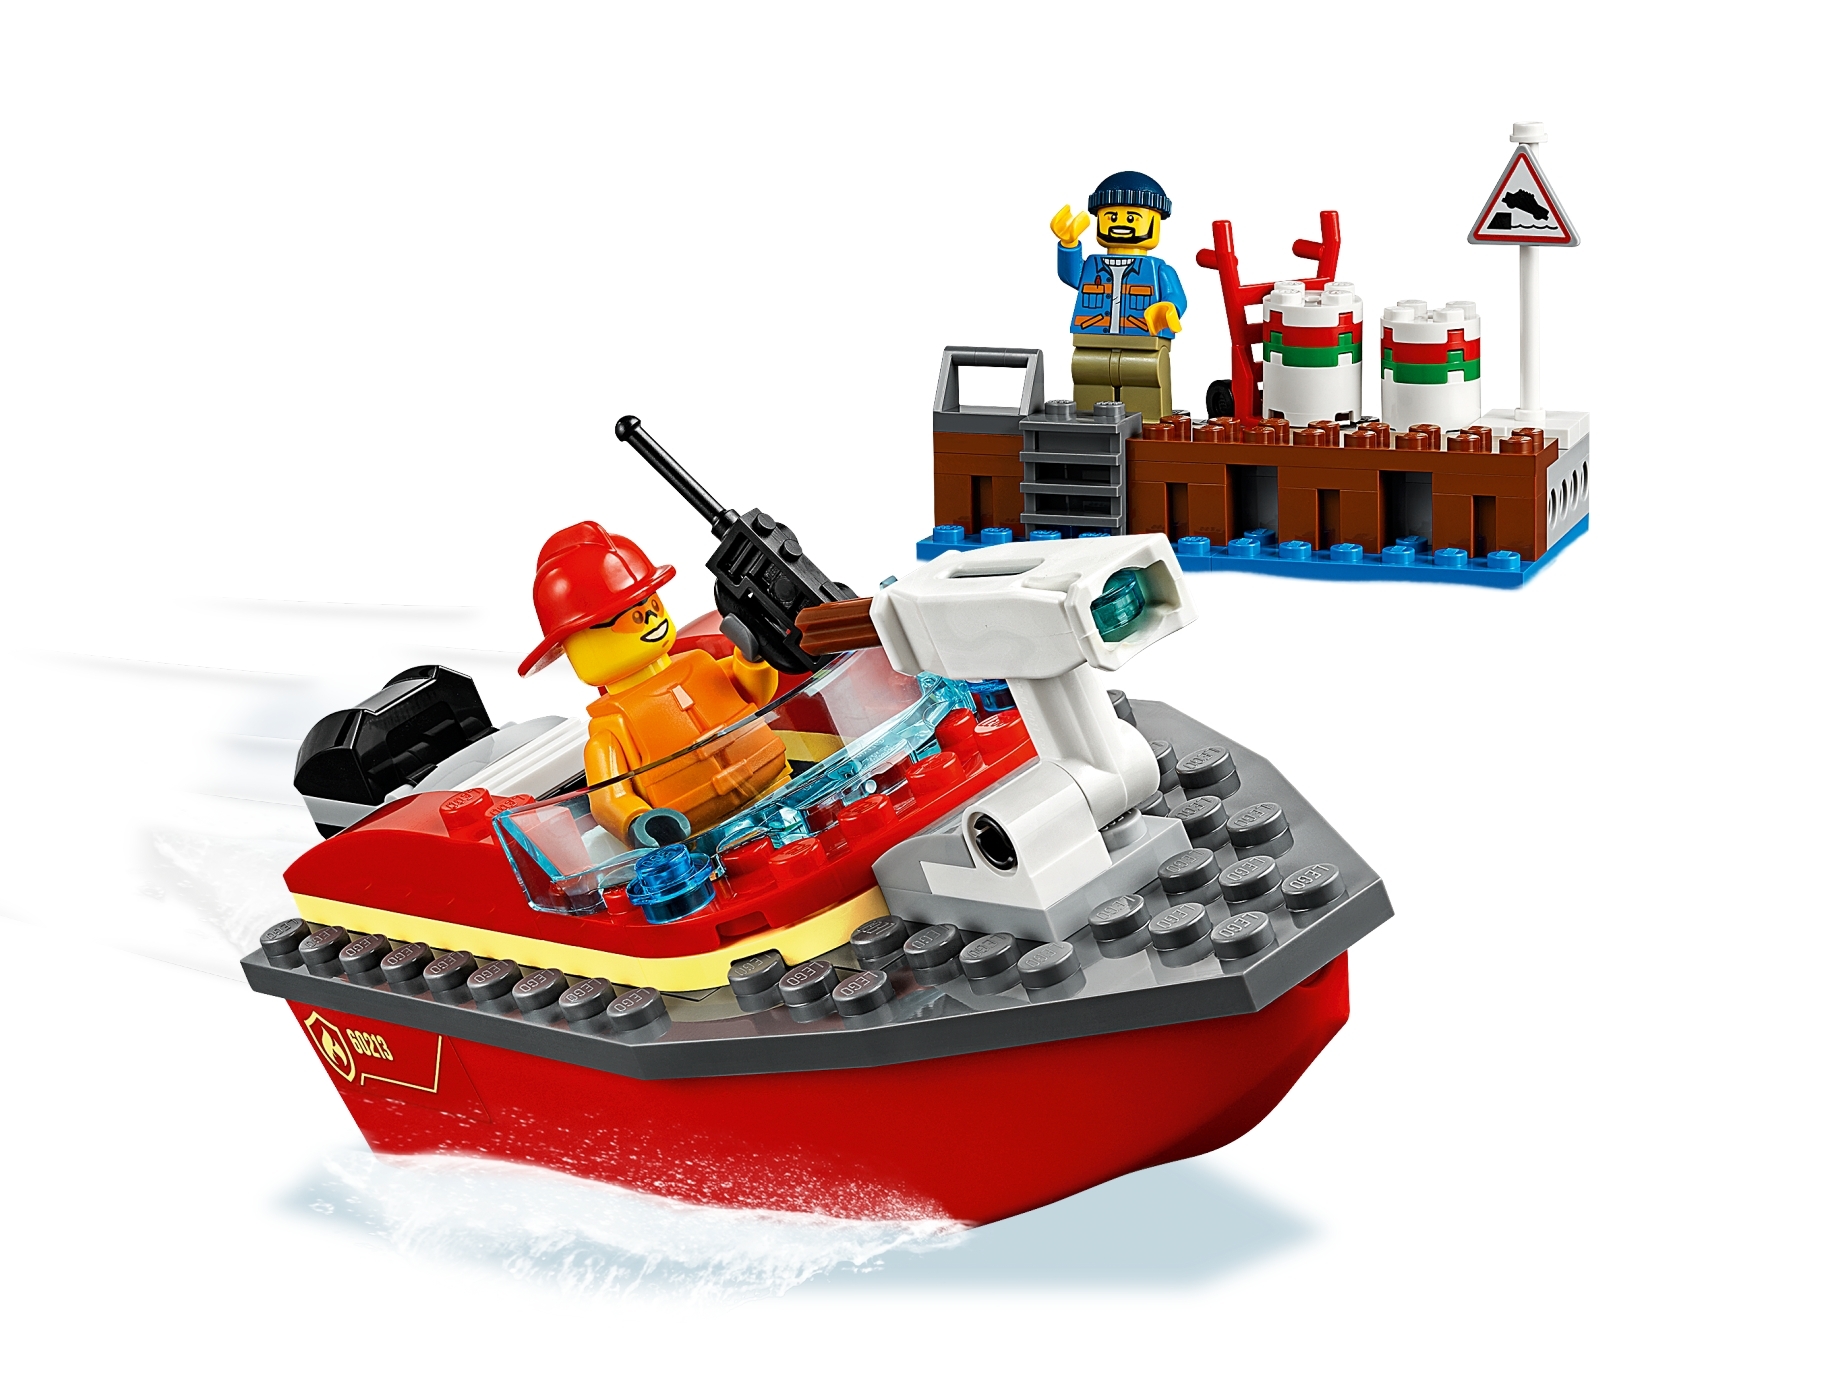 Walter Cunningham maternal omfatte Dock Side Fire 60213 | City | Buy online at the Official LEGO® Shop US